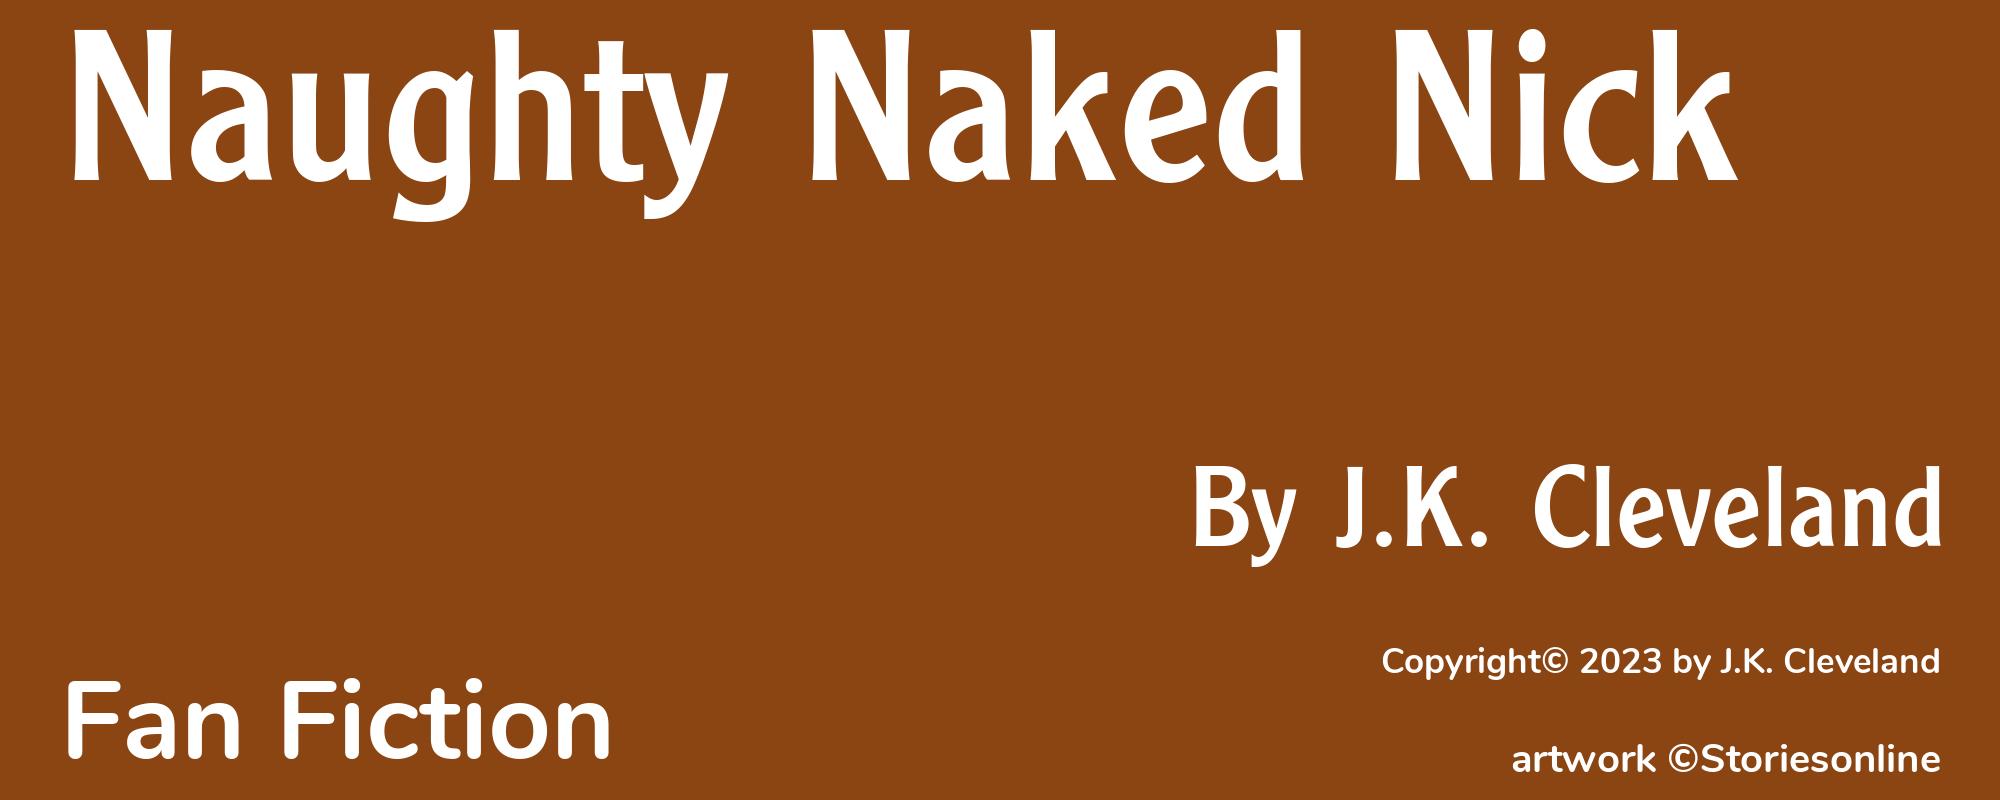 Naughty Naked Nick - Cover